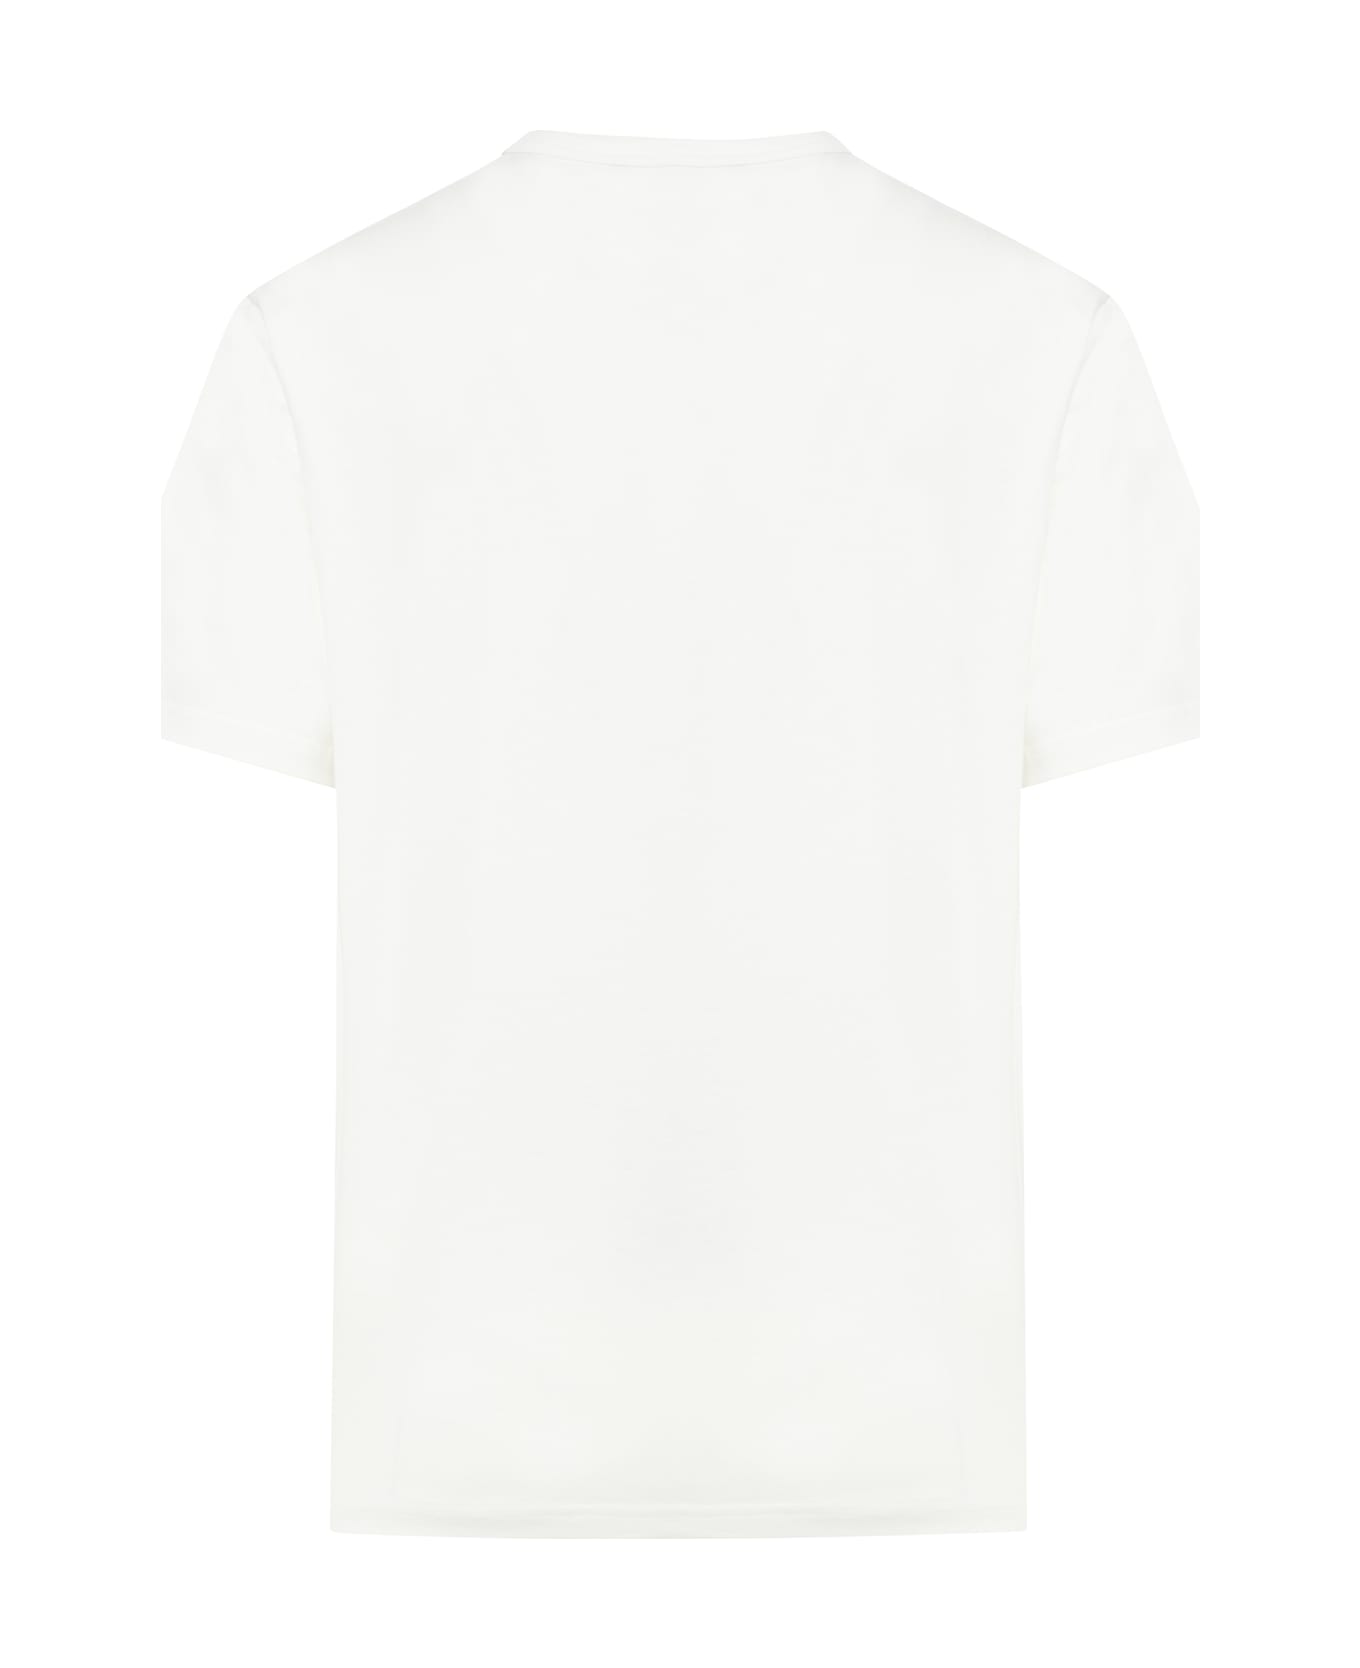 Sunnei Classic T-shirt Big Logo Embroidered - Off White Dark Navy